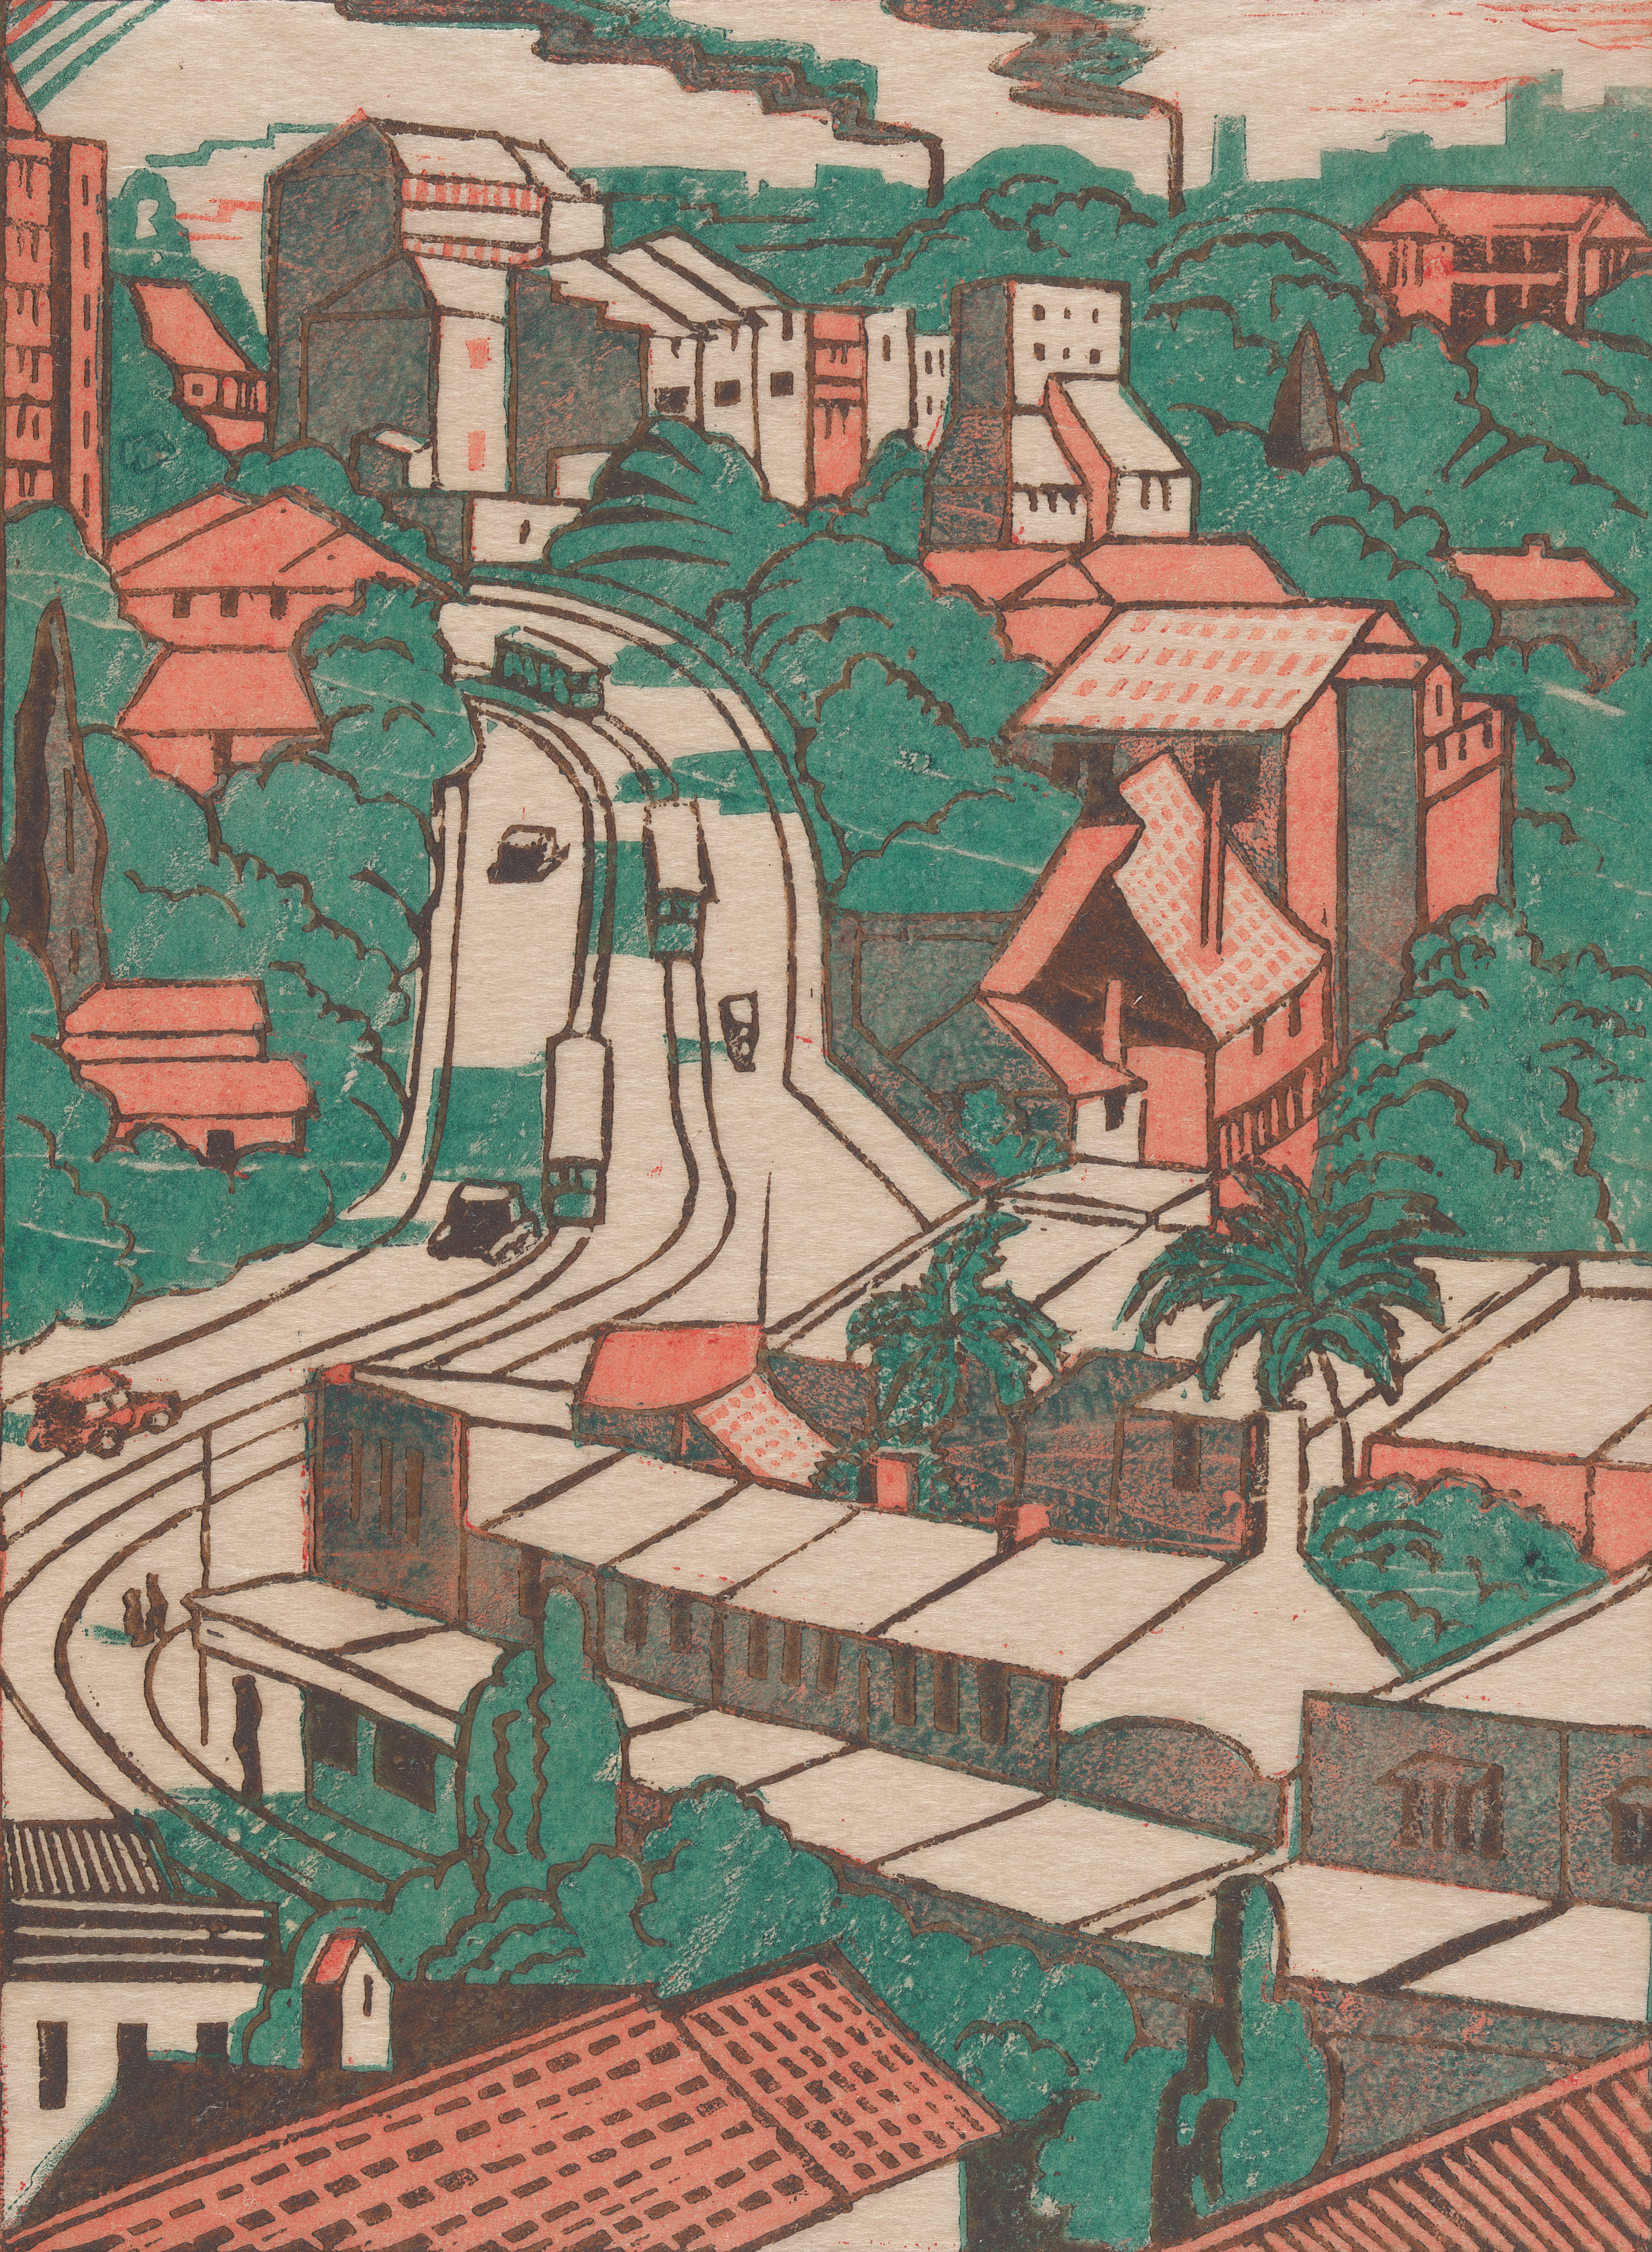 Eveline Syme, <em>Sydney tram line</em>, 1936, linocut, printed in colour inks, from four blocks, National Gallery of Australia, Kamberri/Canberra. Purchased 1979.<br />
© Estate of Eveline Syme